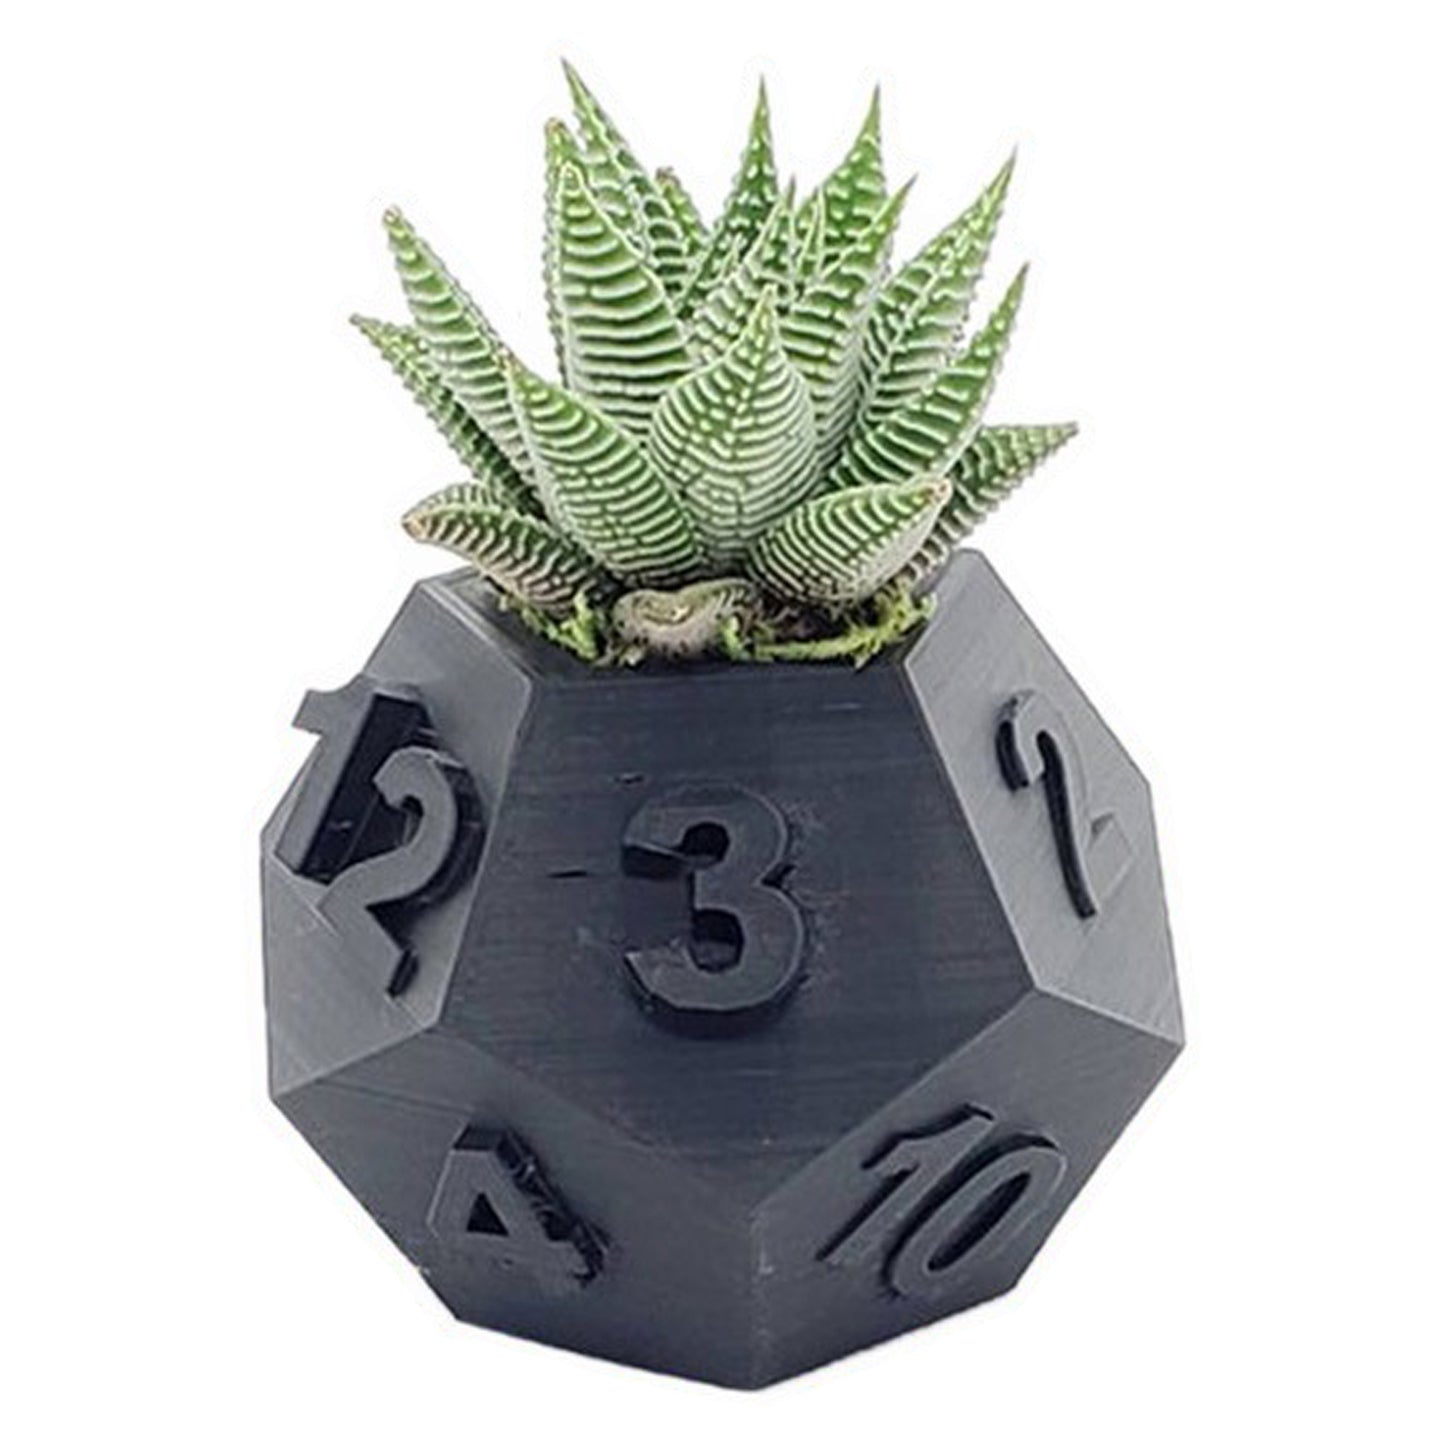 3D Printed Tabletop RPG Dice Succulent Planter Pot